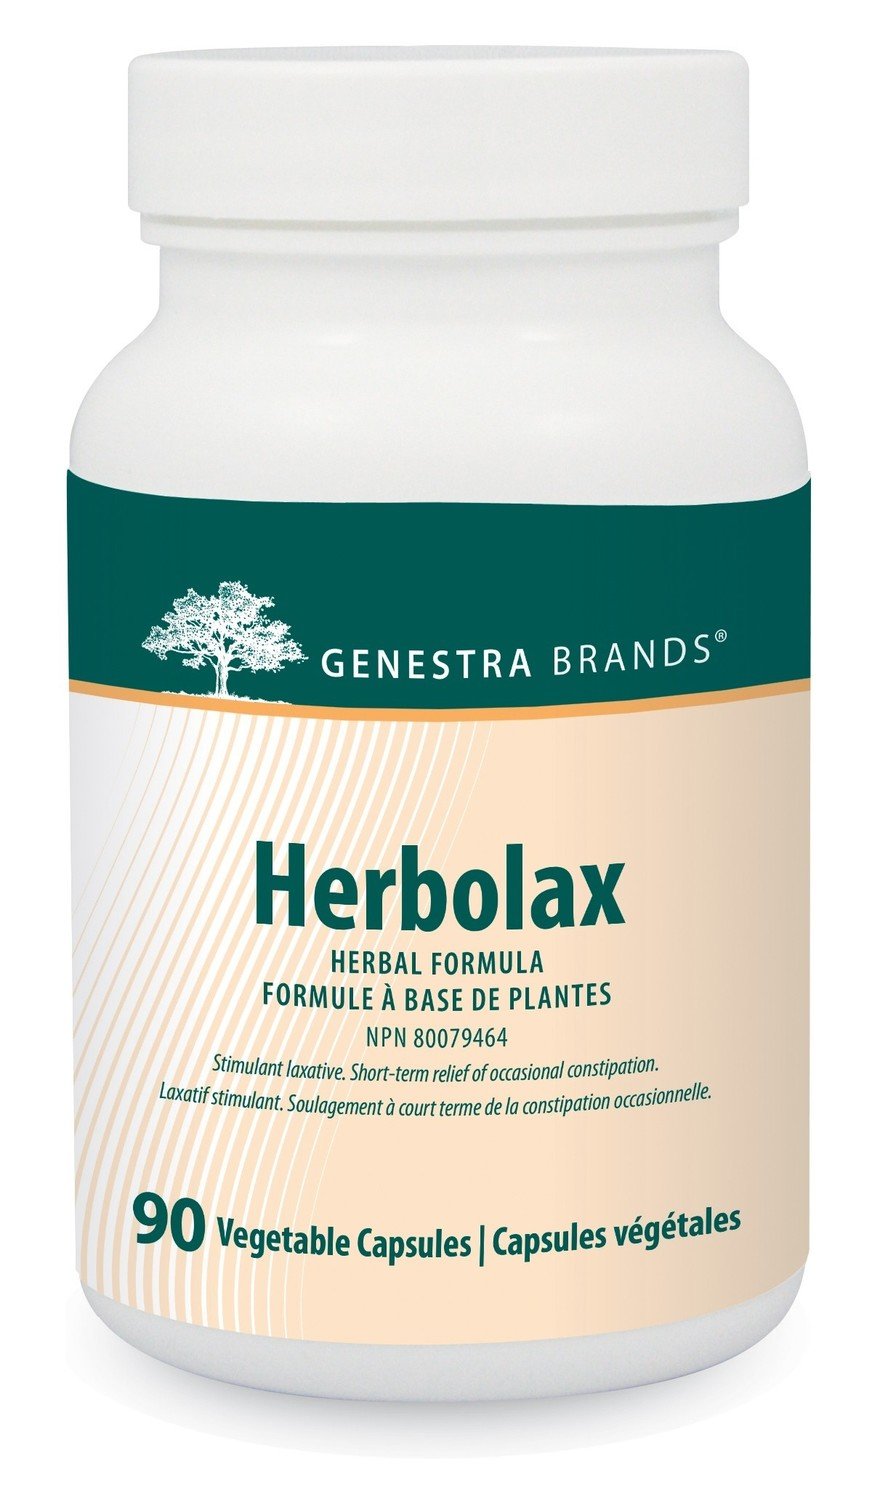 Herbolax by Genestra